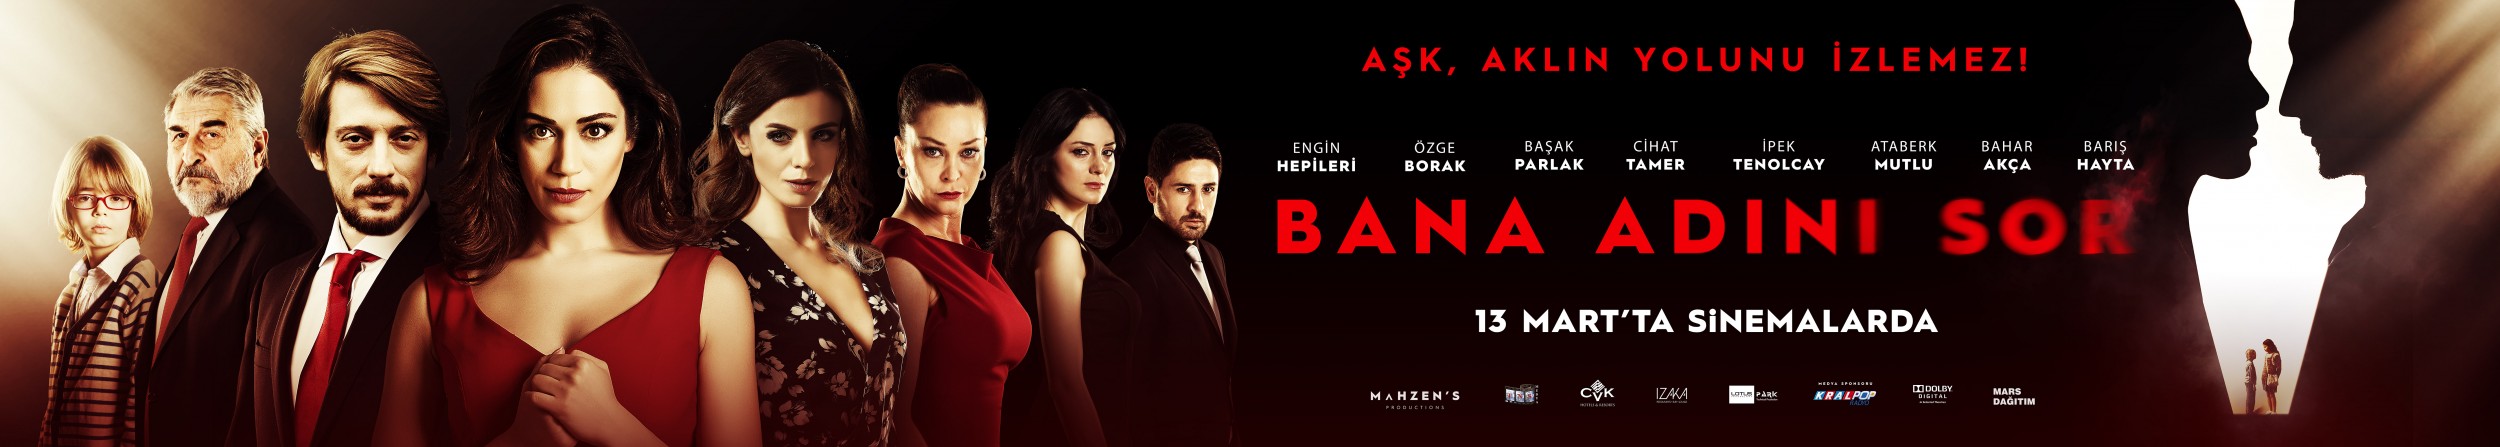 Extra Large Movie Poster Image for Bana Adını Sor (#11 of 11)